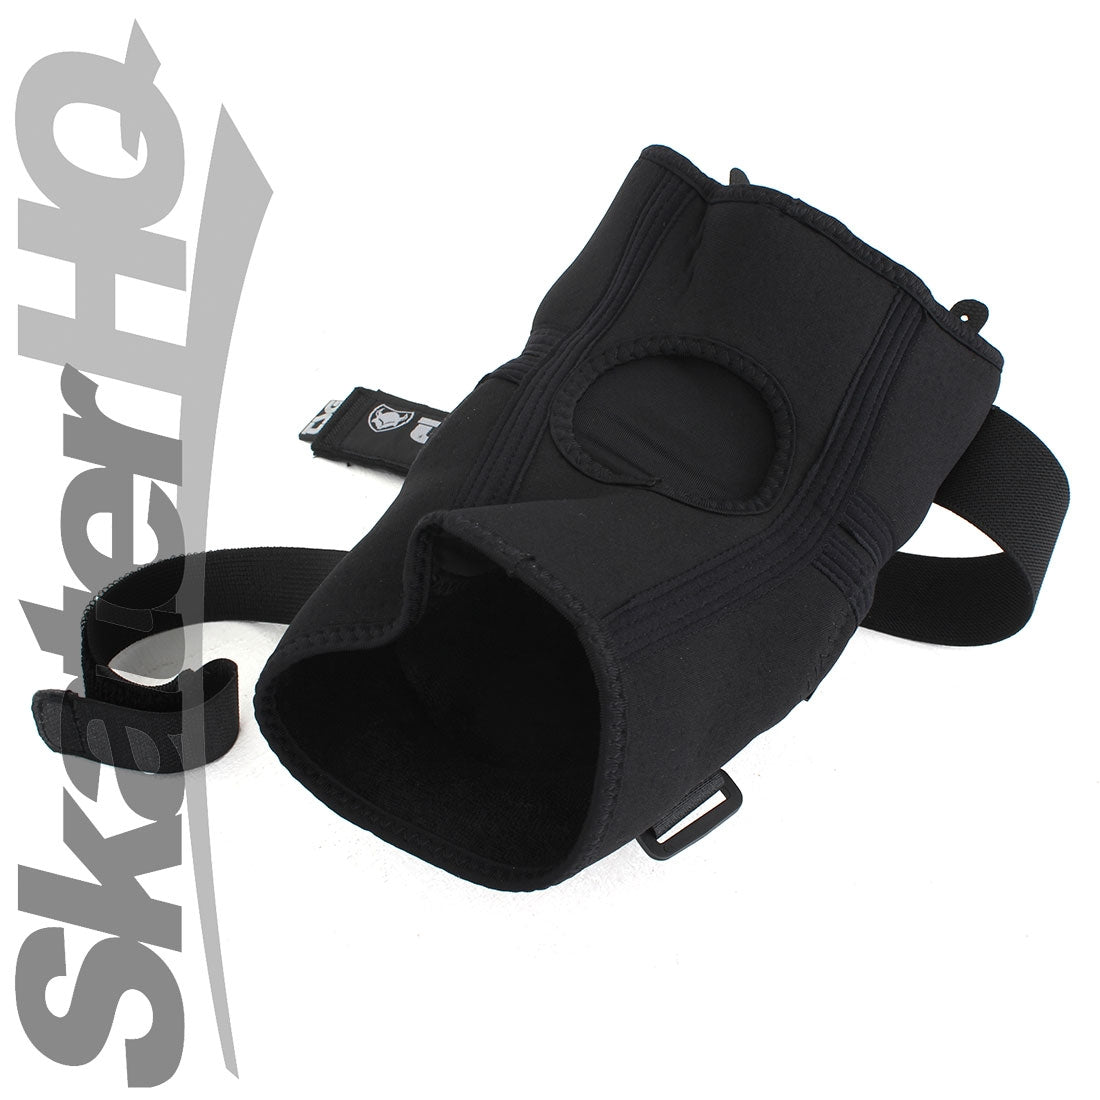 TSG Tahoe Arti-Lage Kneeguard Black - Small Protective Gear